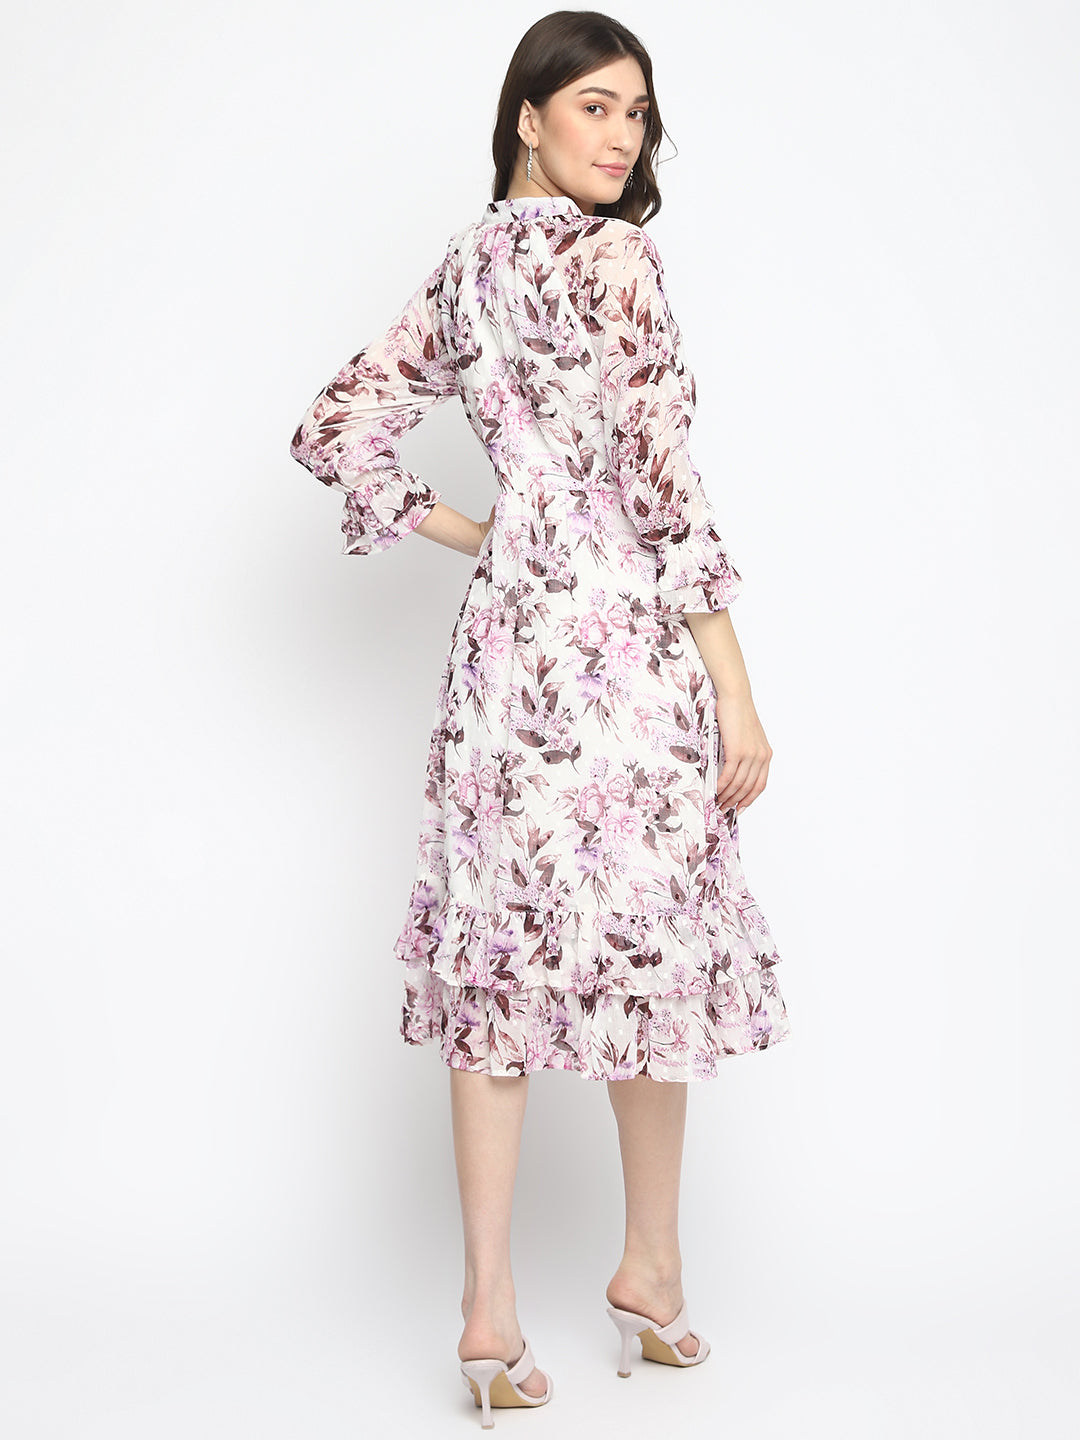 Lilac Three-Quarter Sleeves V-Neck Printed Knee Length Dress For Casual Wear